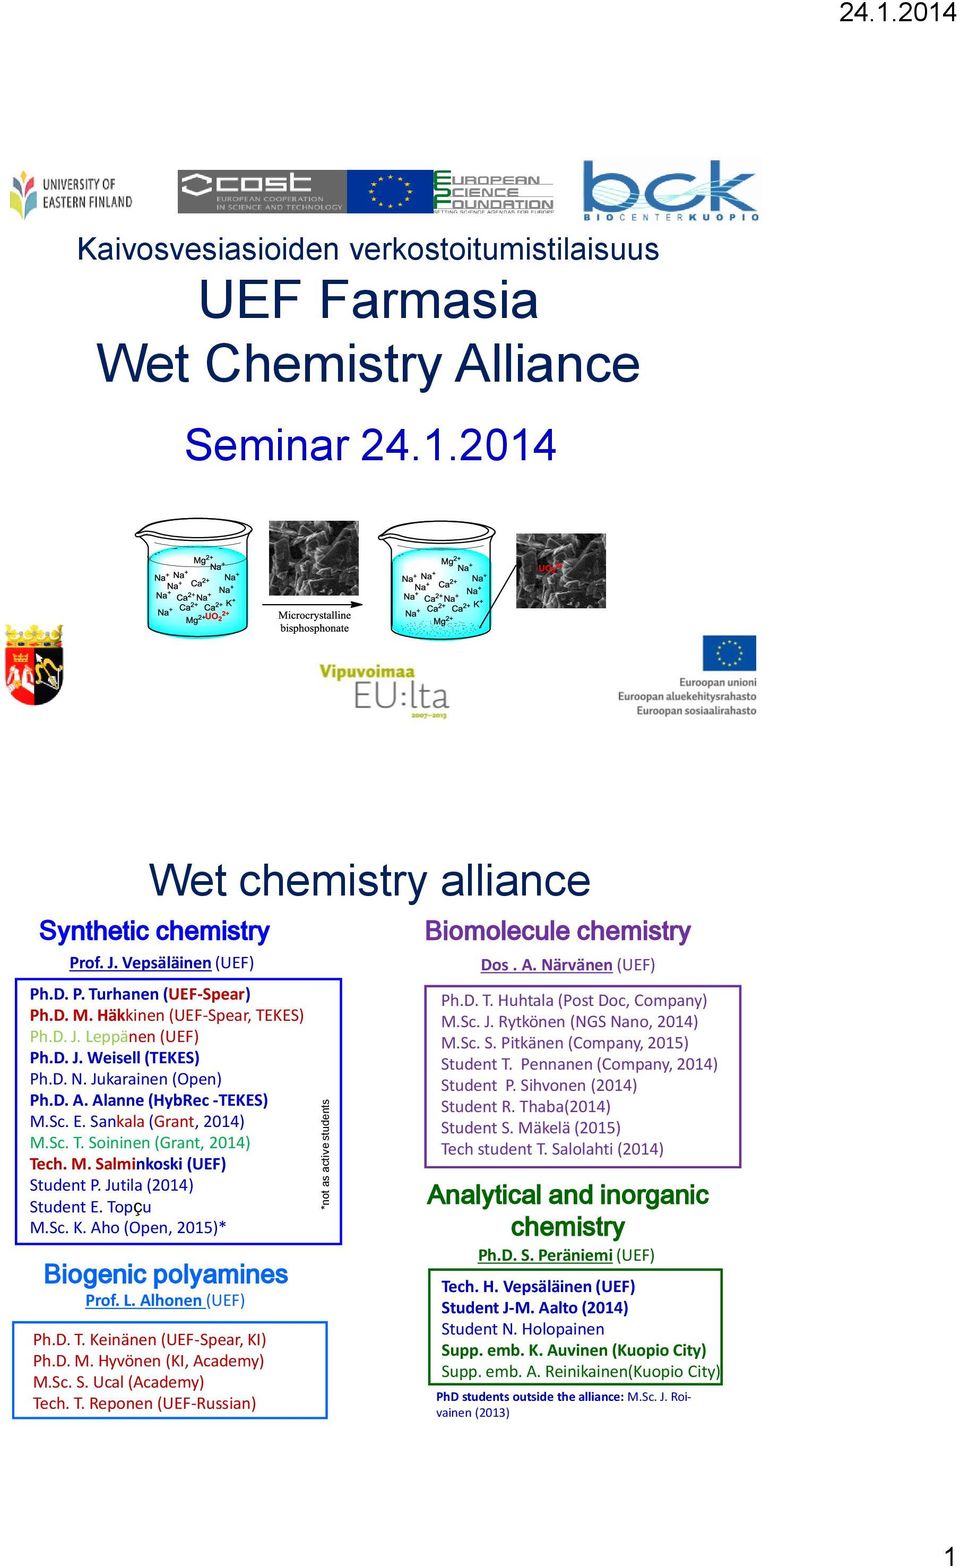 E. Sankala (Grant, 2014) M.Sc. T. Soininen (Grant, 2014) Tech. M. Salminkoski (UEF) Student P. Jutila (2014) Student E. Topçu M.Sc. K. Aho (Open, 2015)* Biogenic polyamines Prof. L. Alhonen (UEF) Ph.